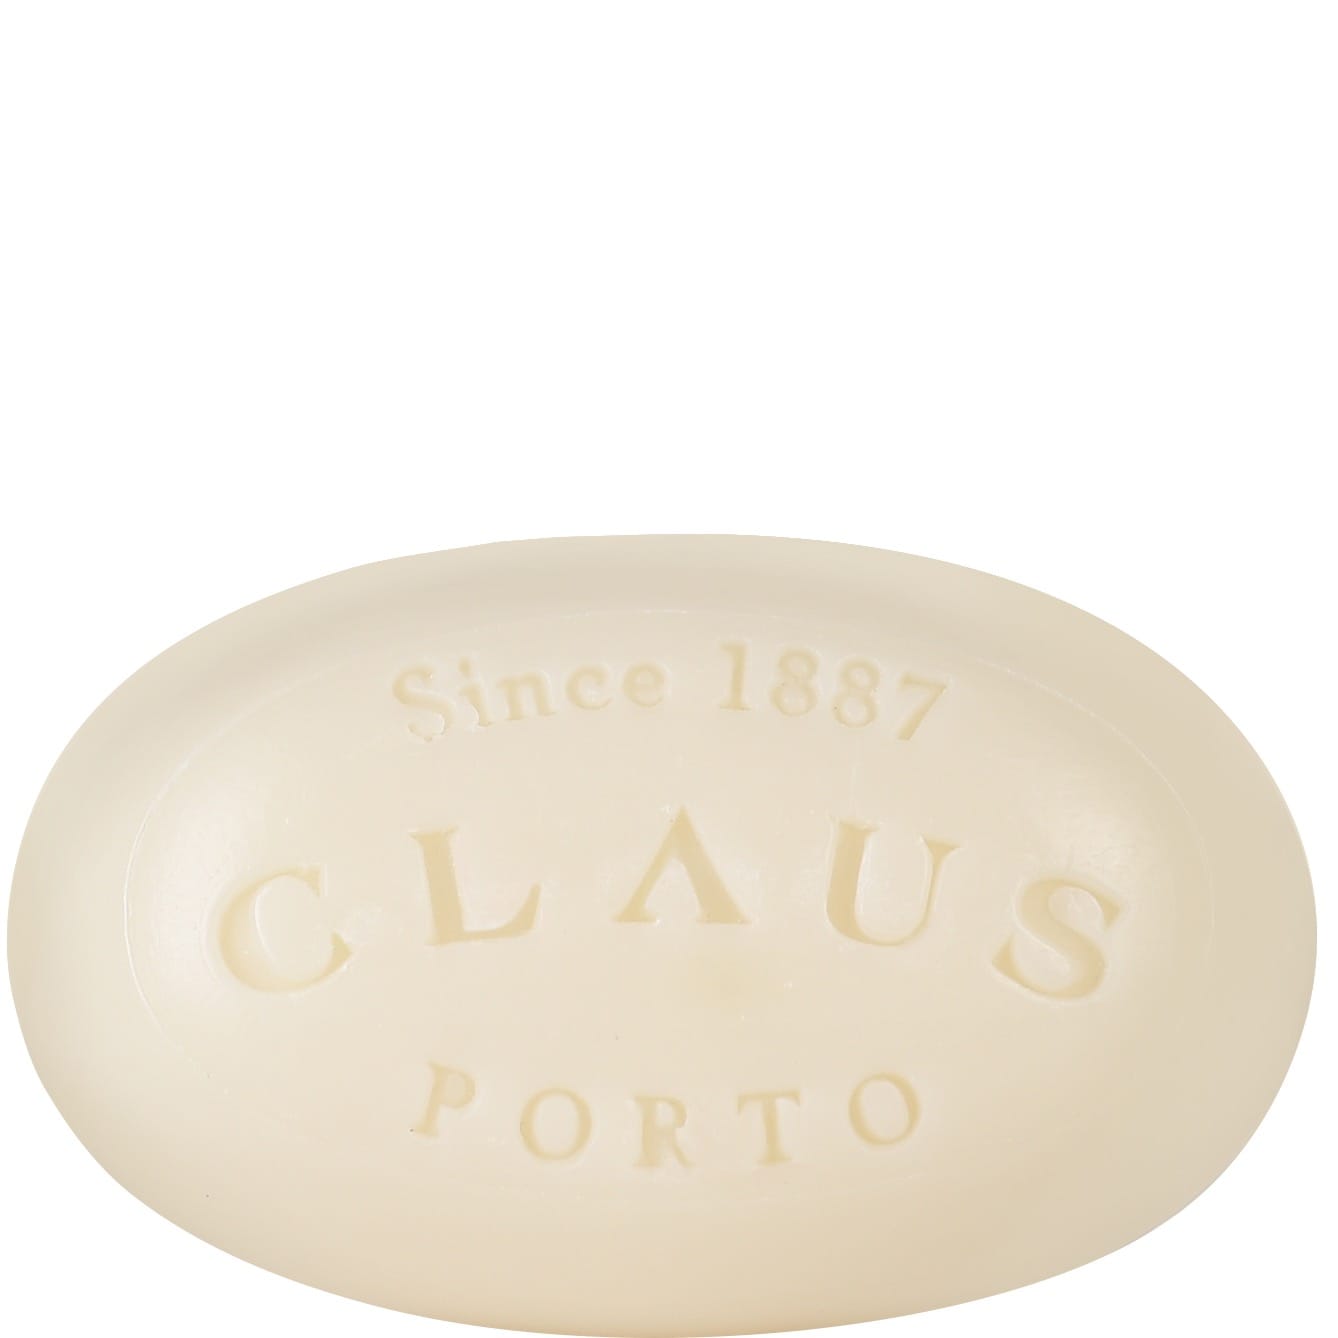 Claus Porto Soap Bar Alface Green Leaf Oil 150g - 1.2 - CP-SP005